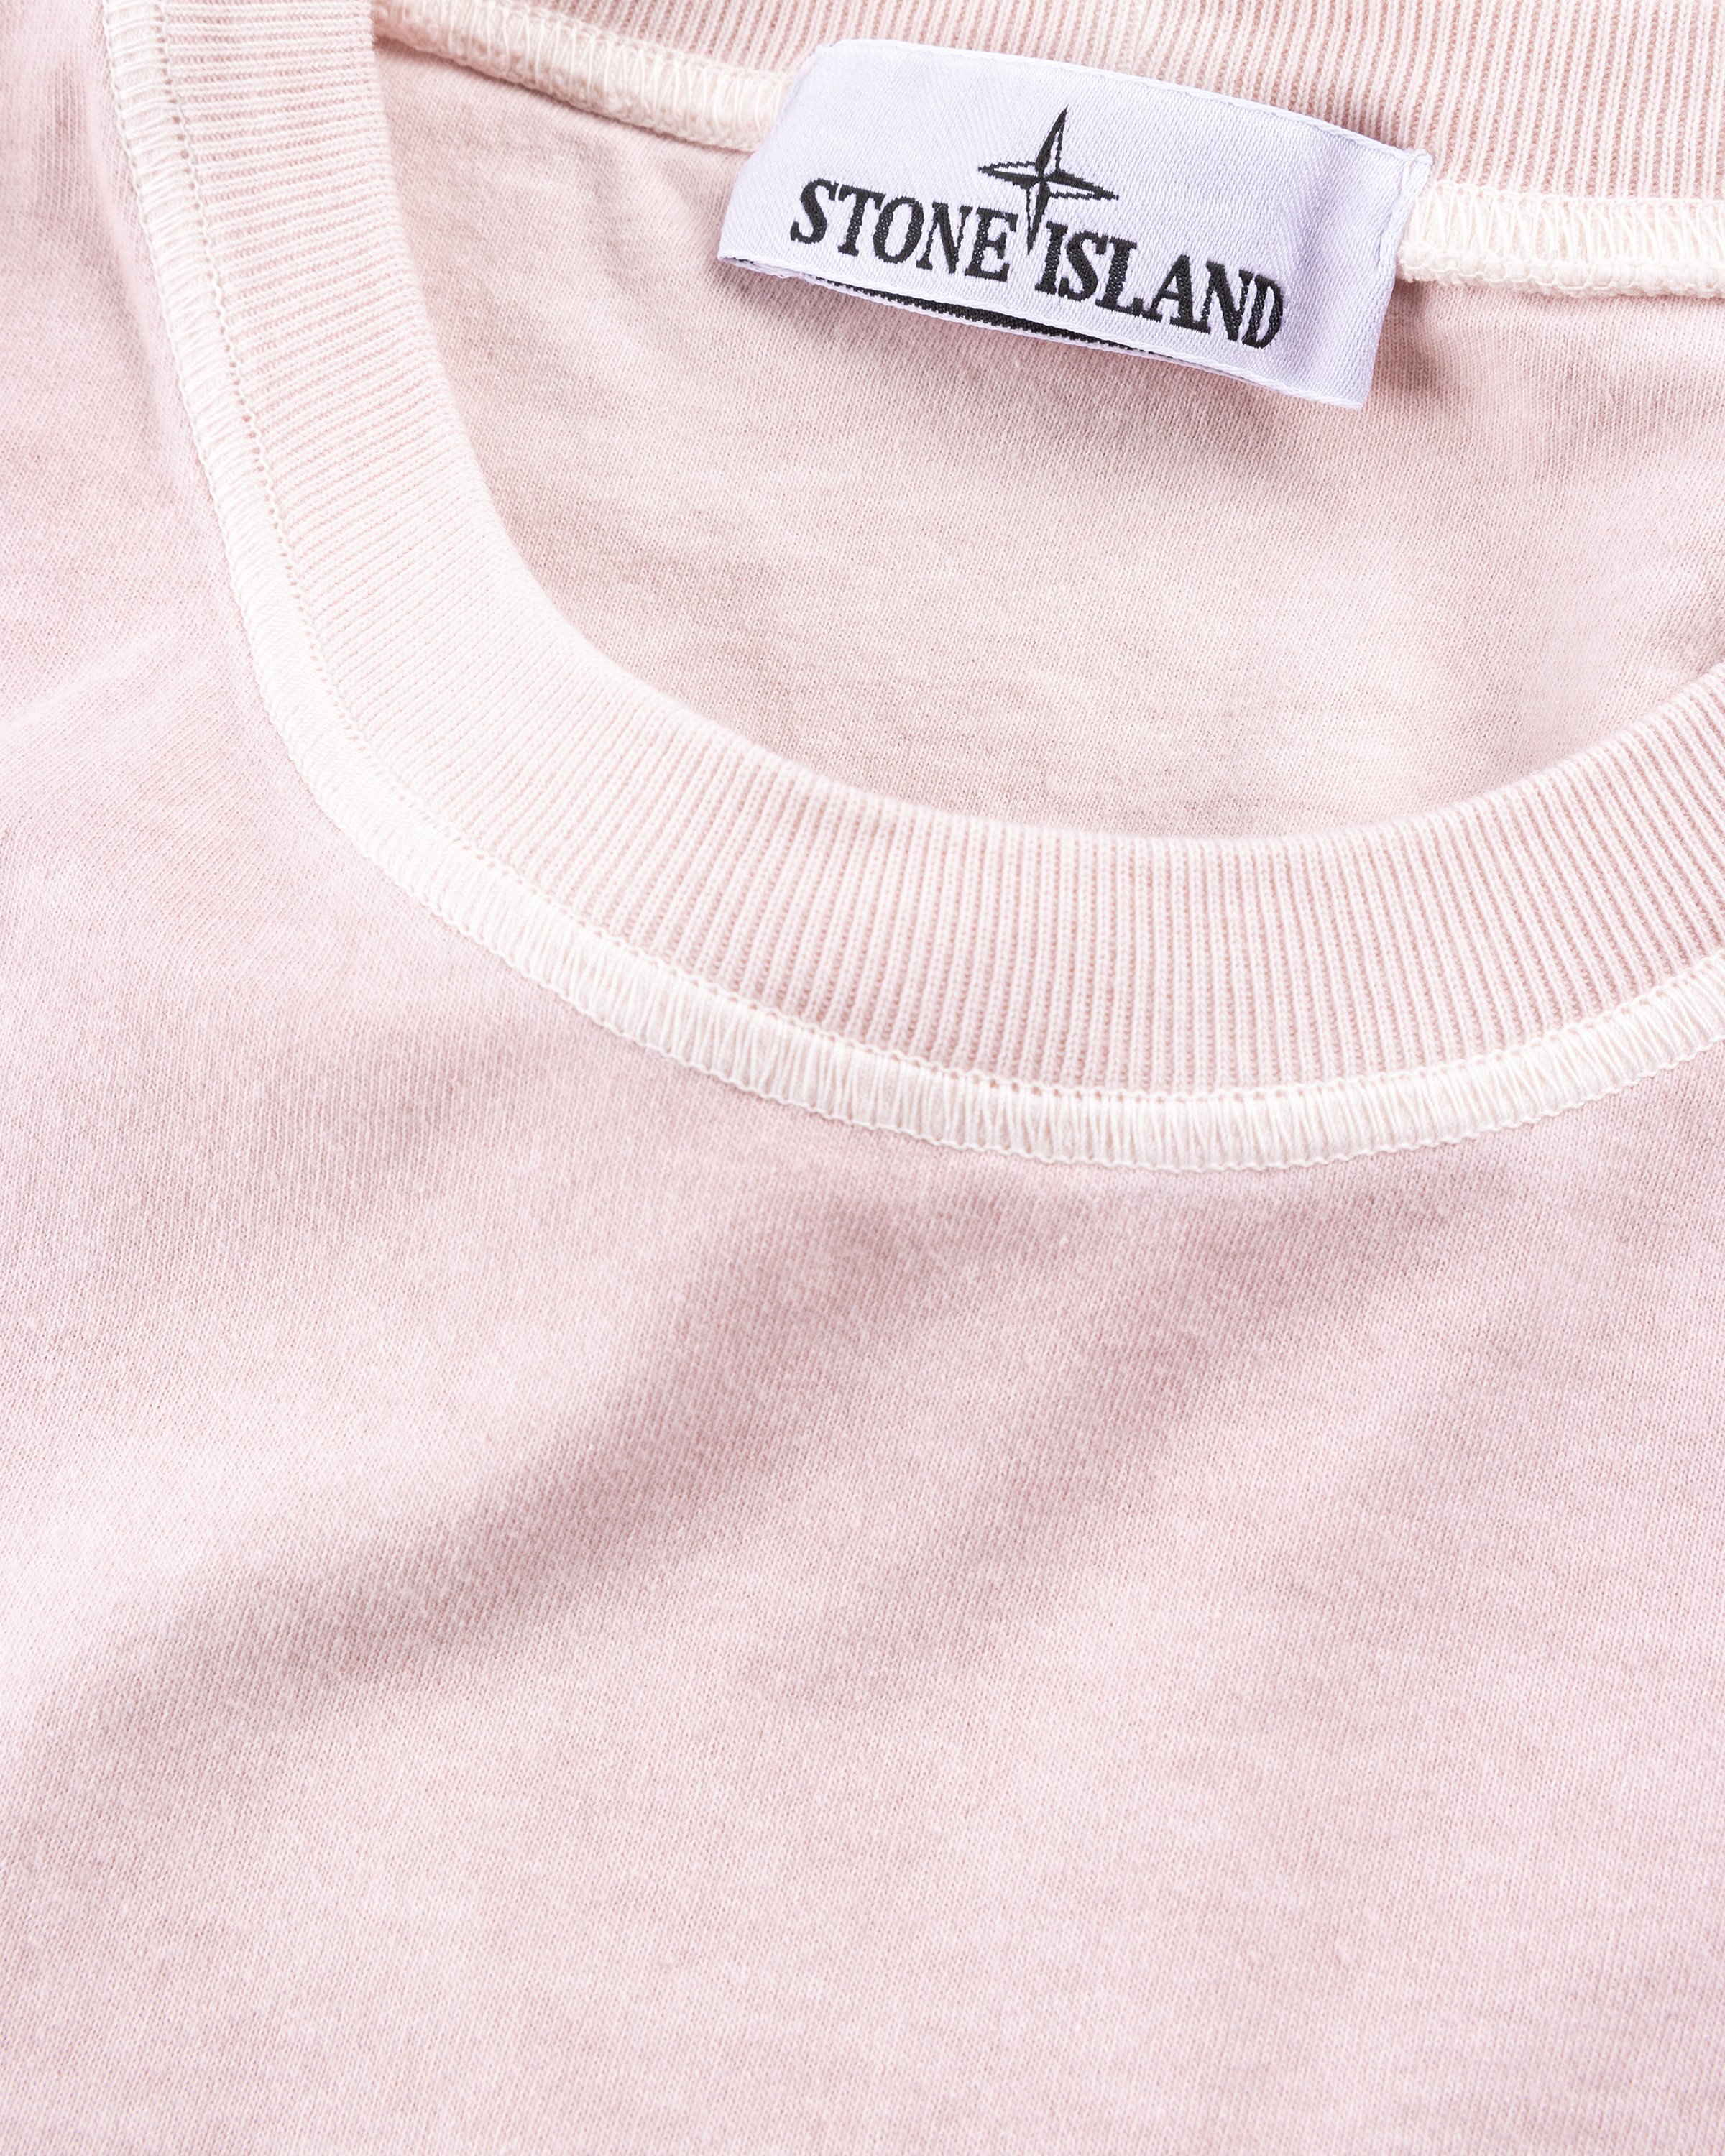 Stone Island - T SHIRT PINK - Clothing - Pink - Image 6